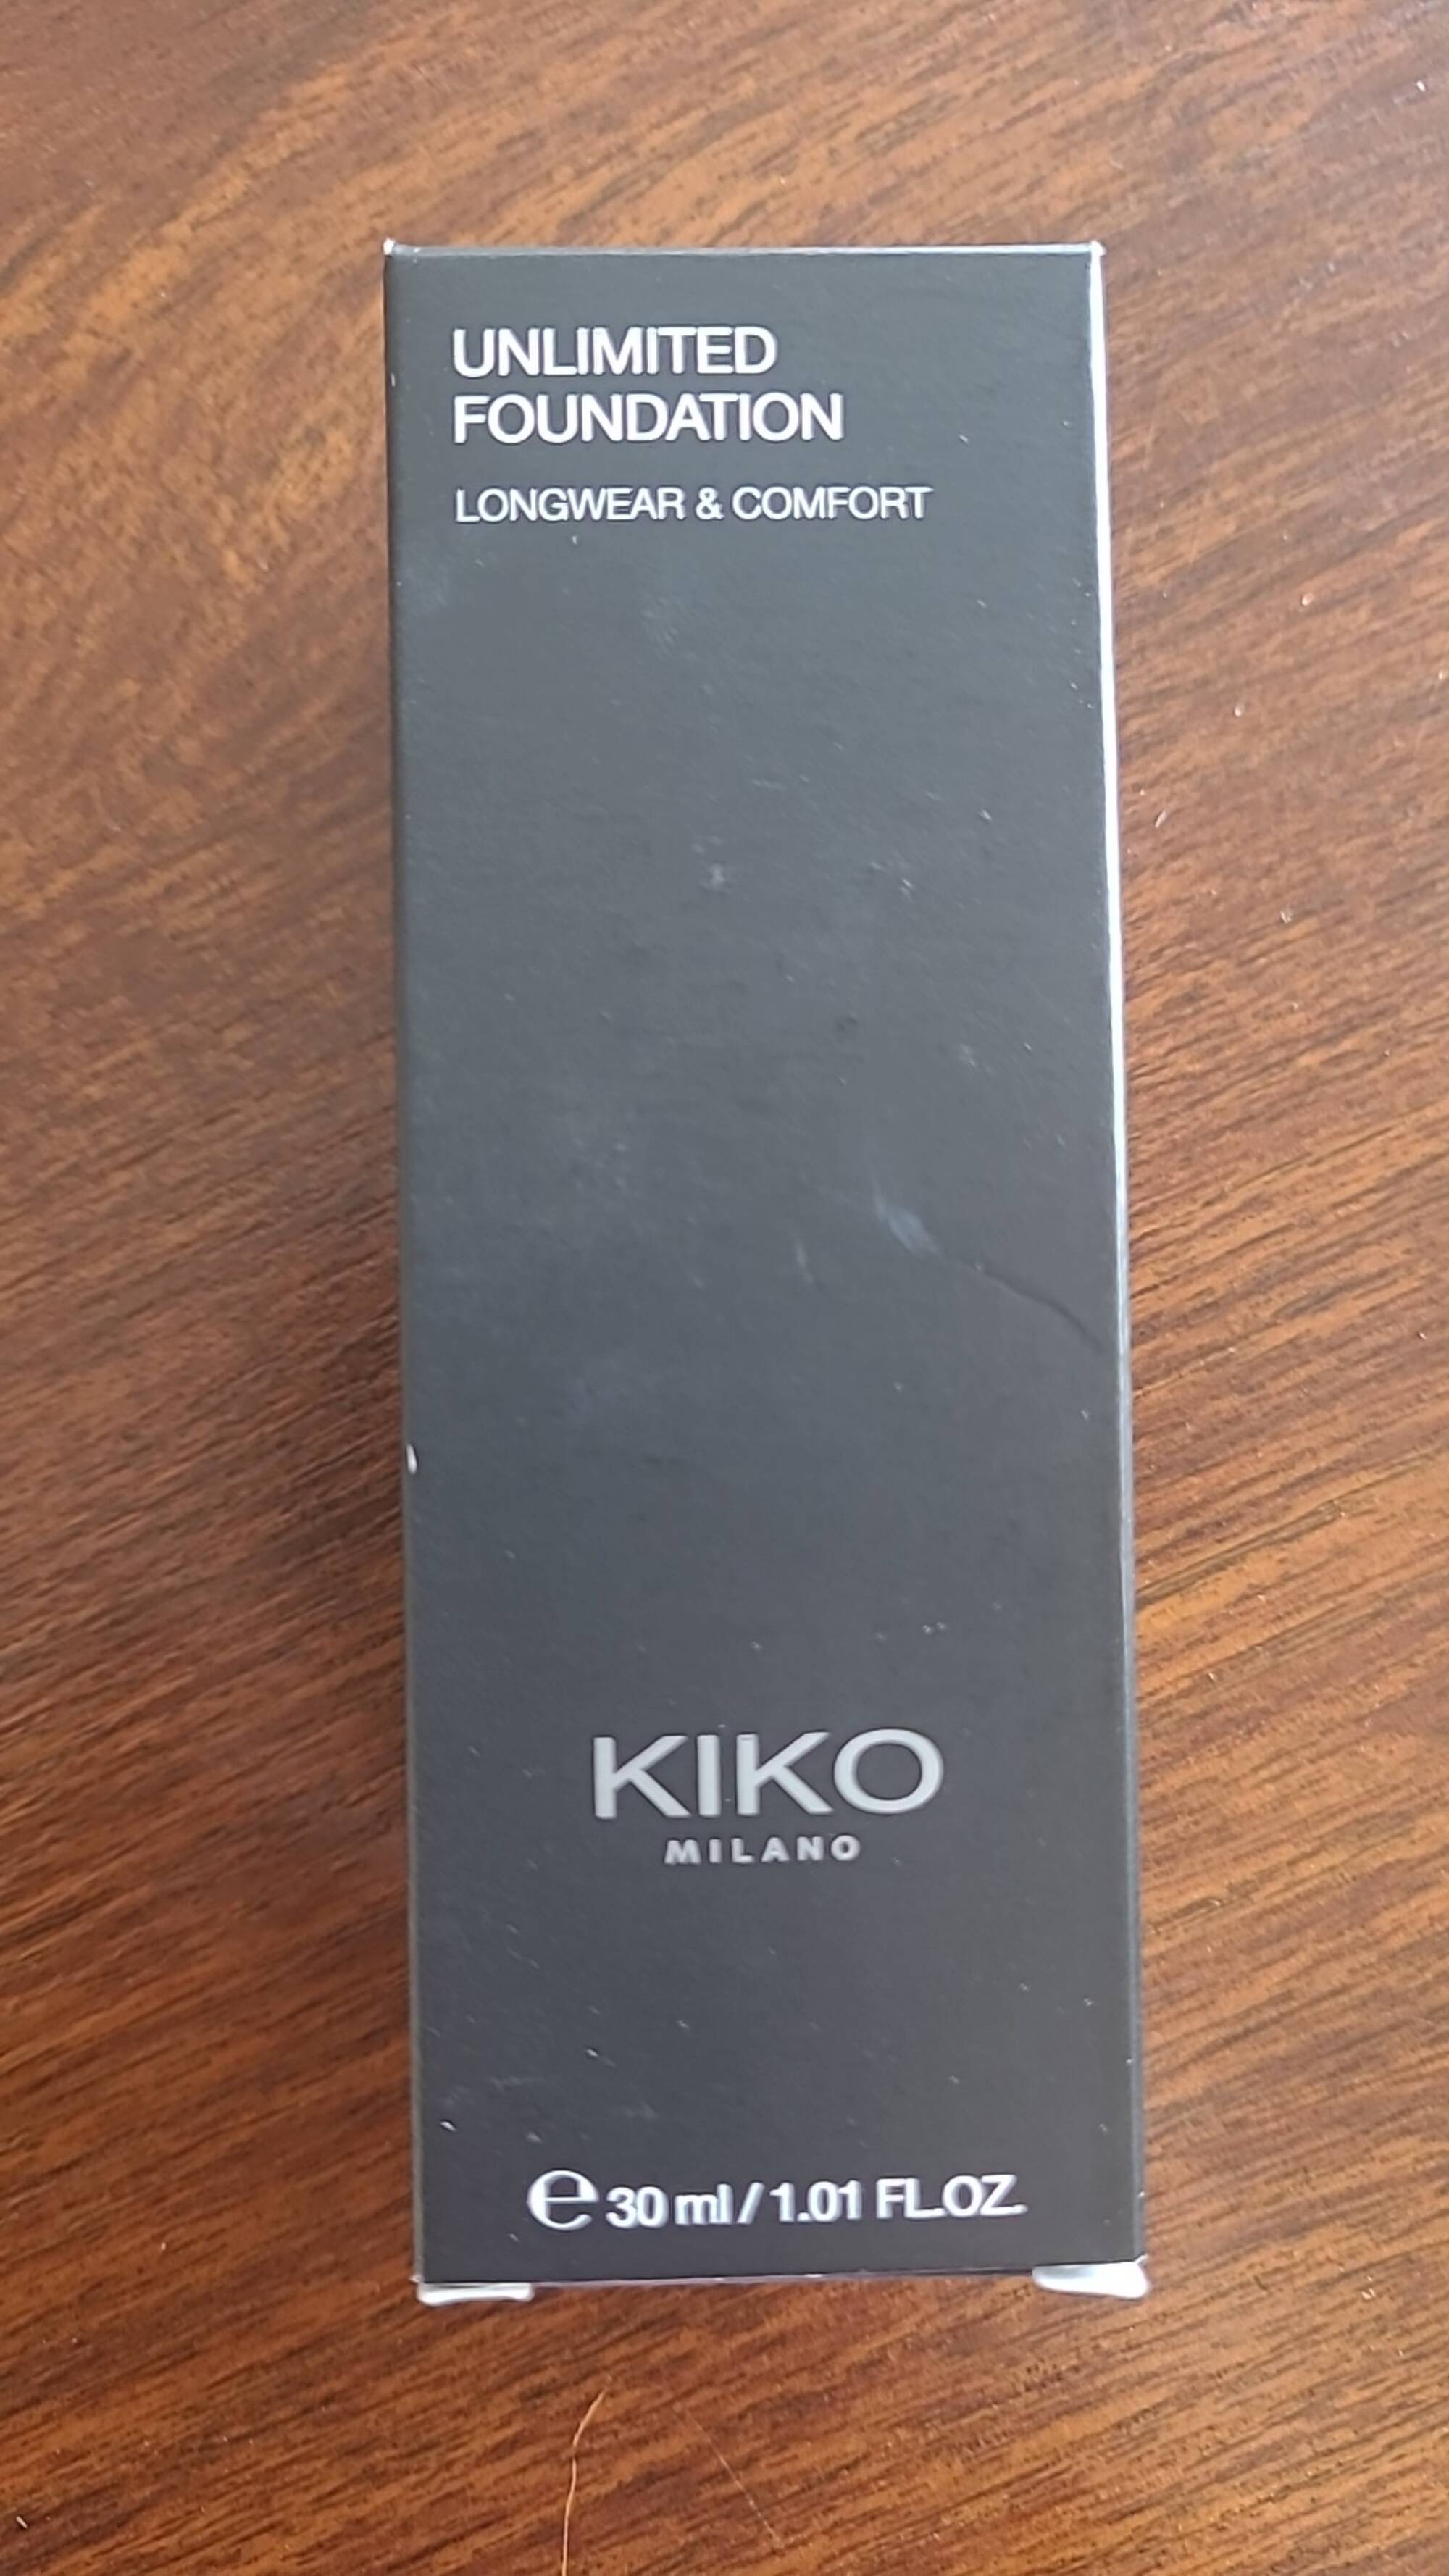 KIKO - Unlimited foundation